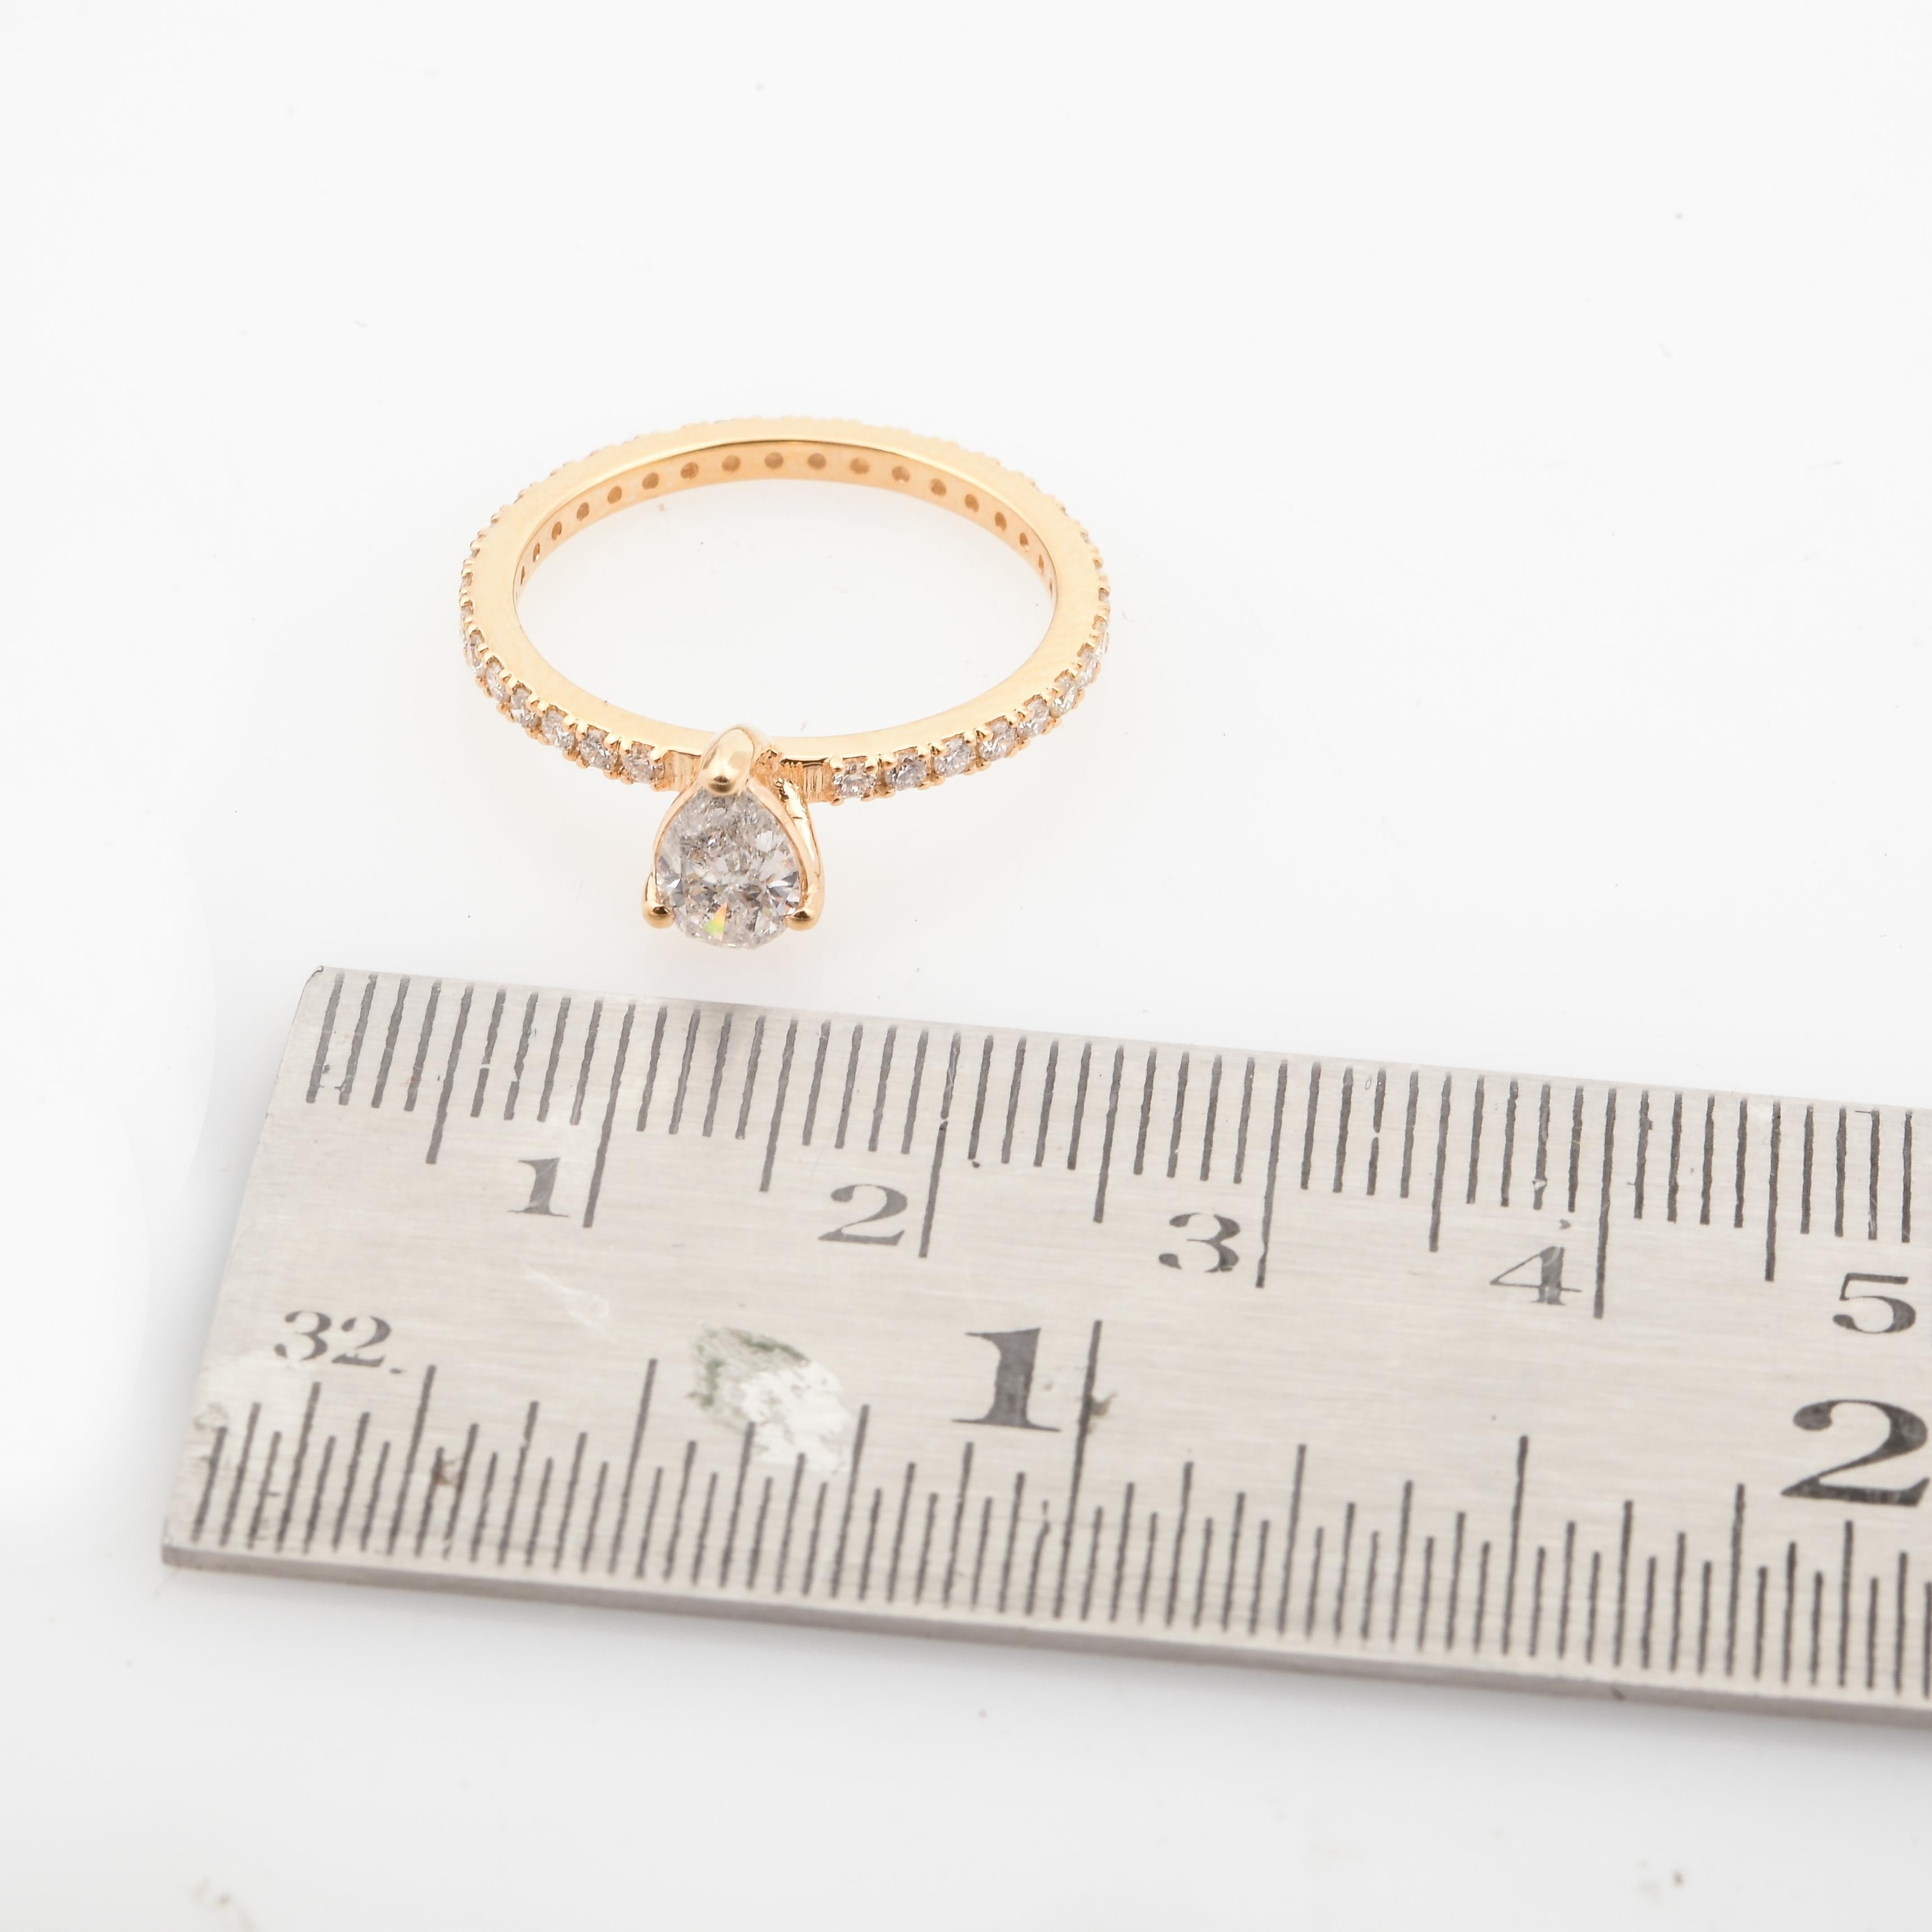 For Sale:  0.91 Carat Pear Diamond Band Ring Solid 14 Karat Yellow Gold Handmade Jewelry 5